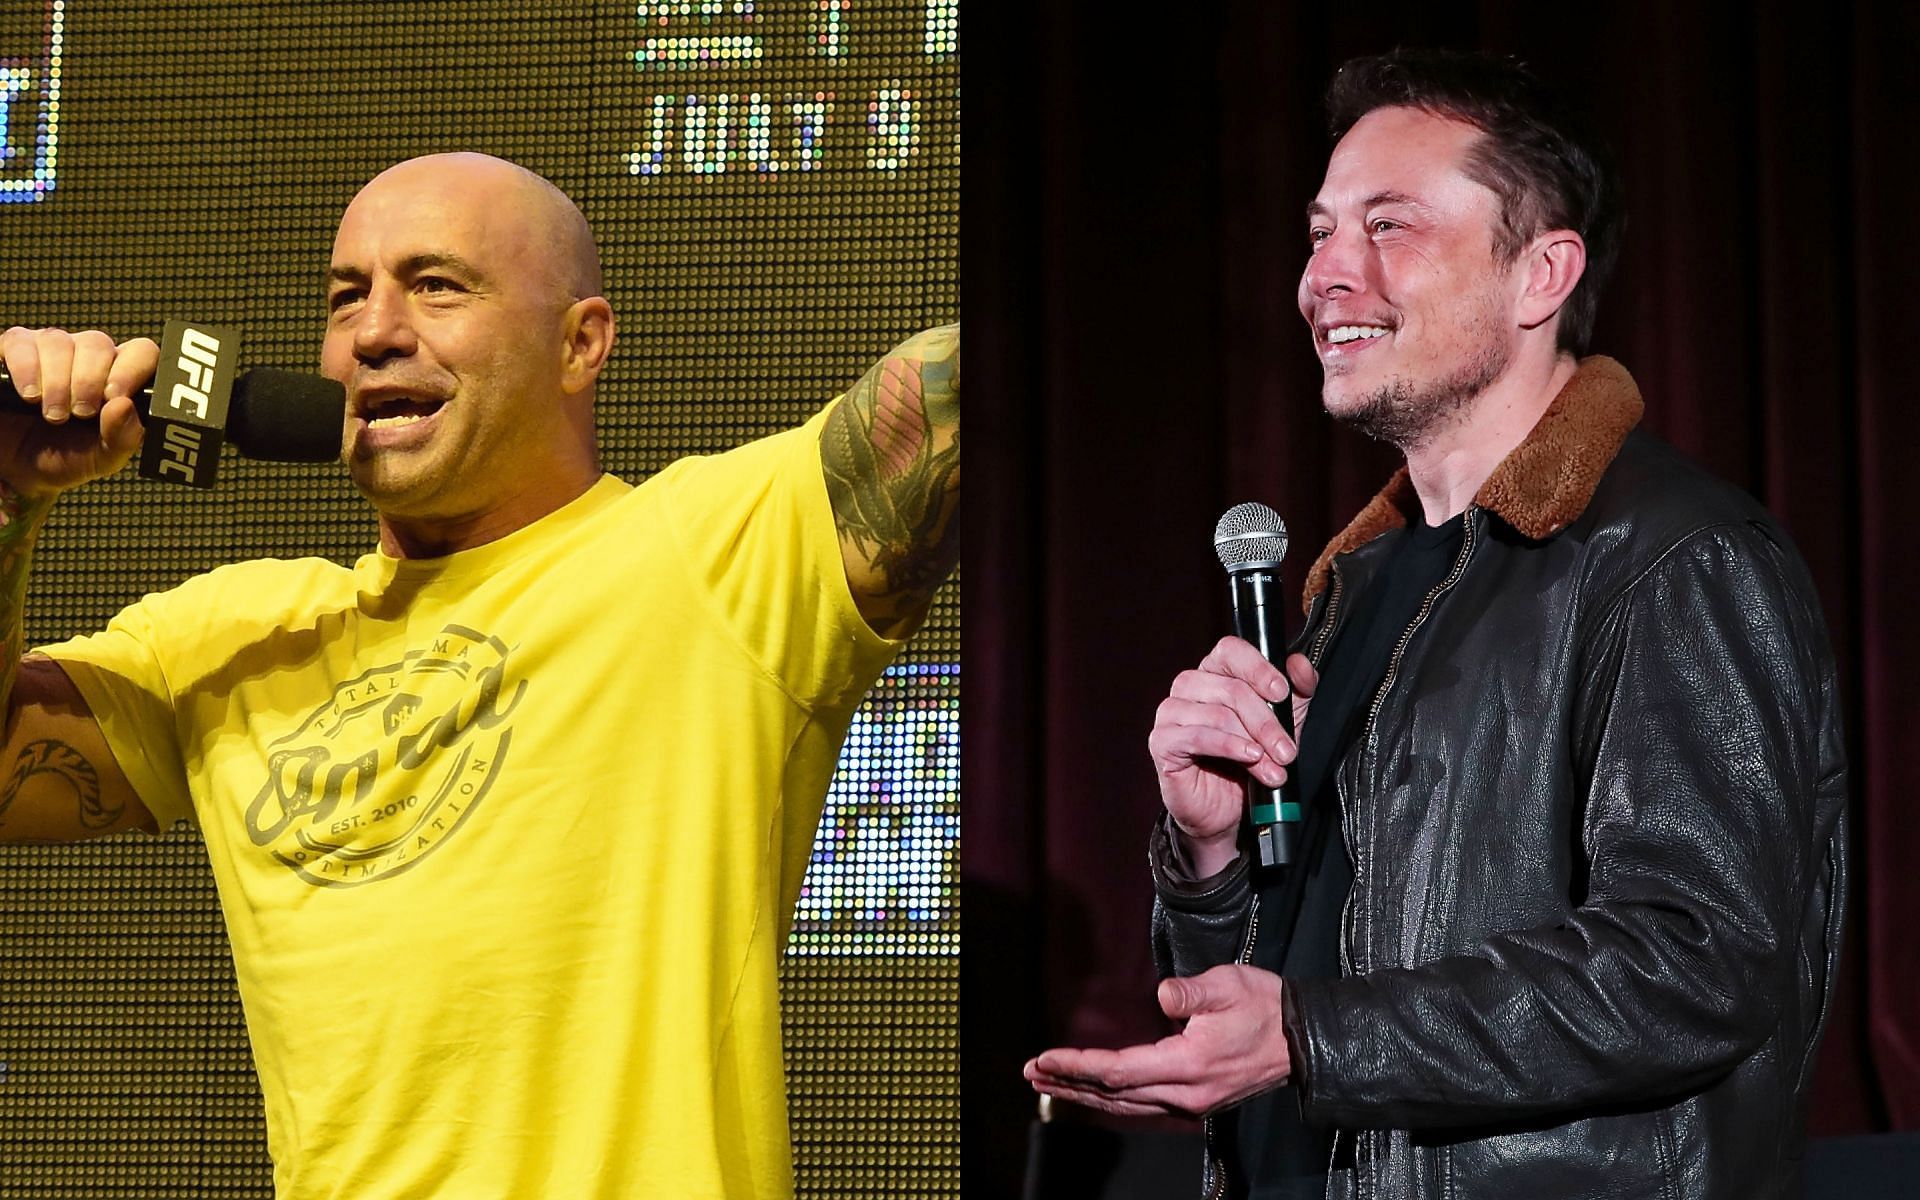 Joe Rogan (left) and Elon Musk (right) (Images via Getty)